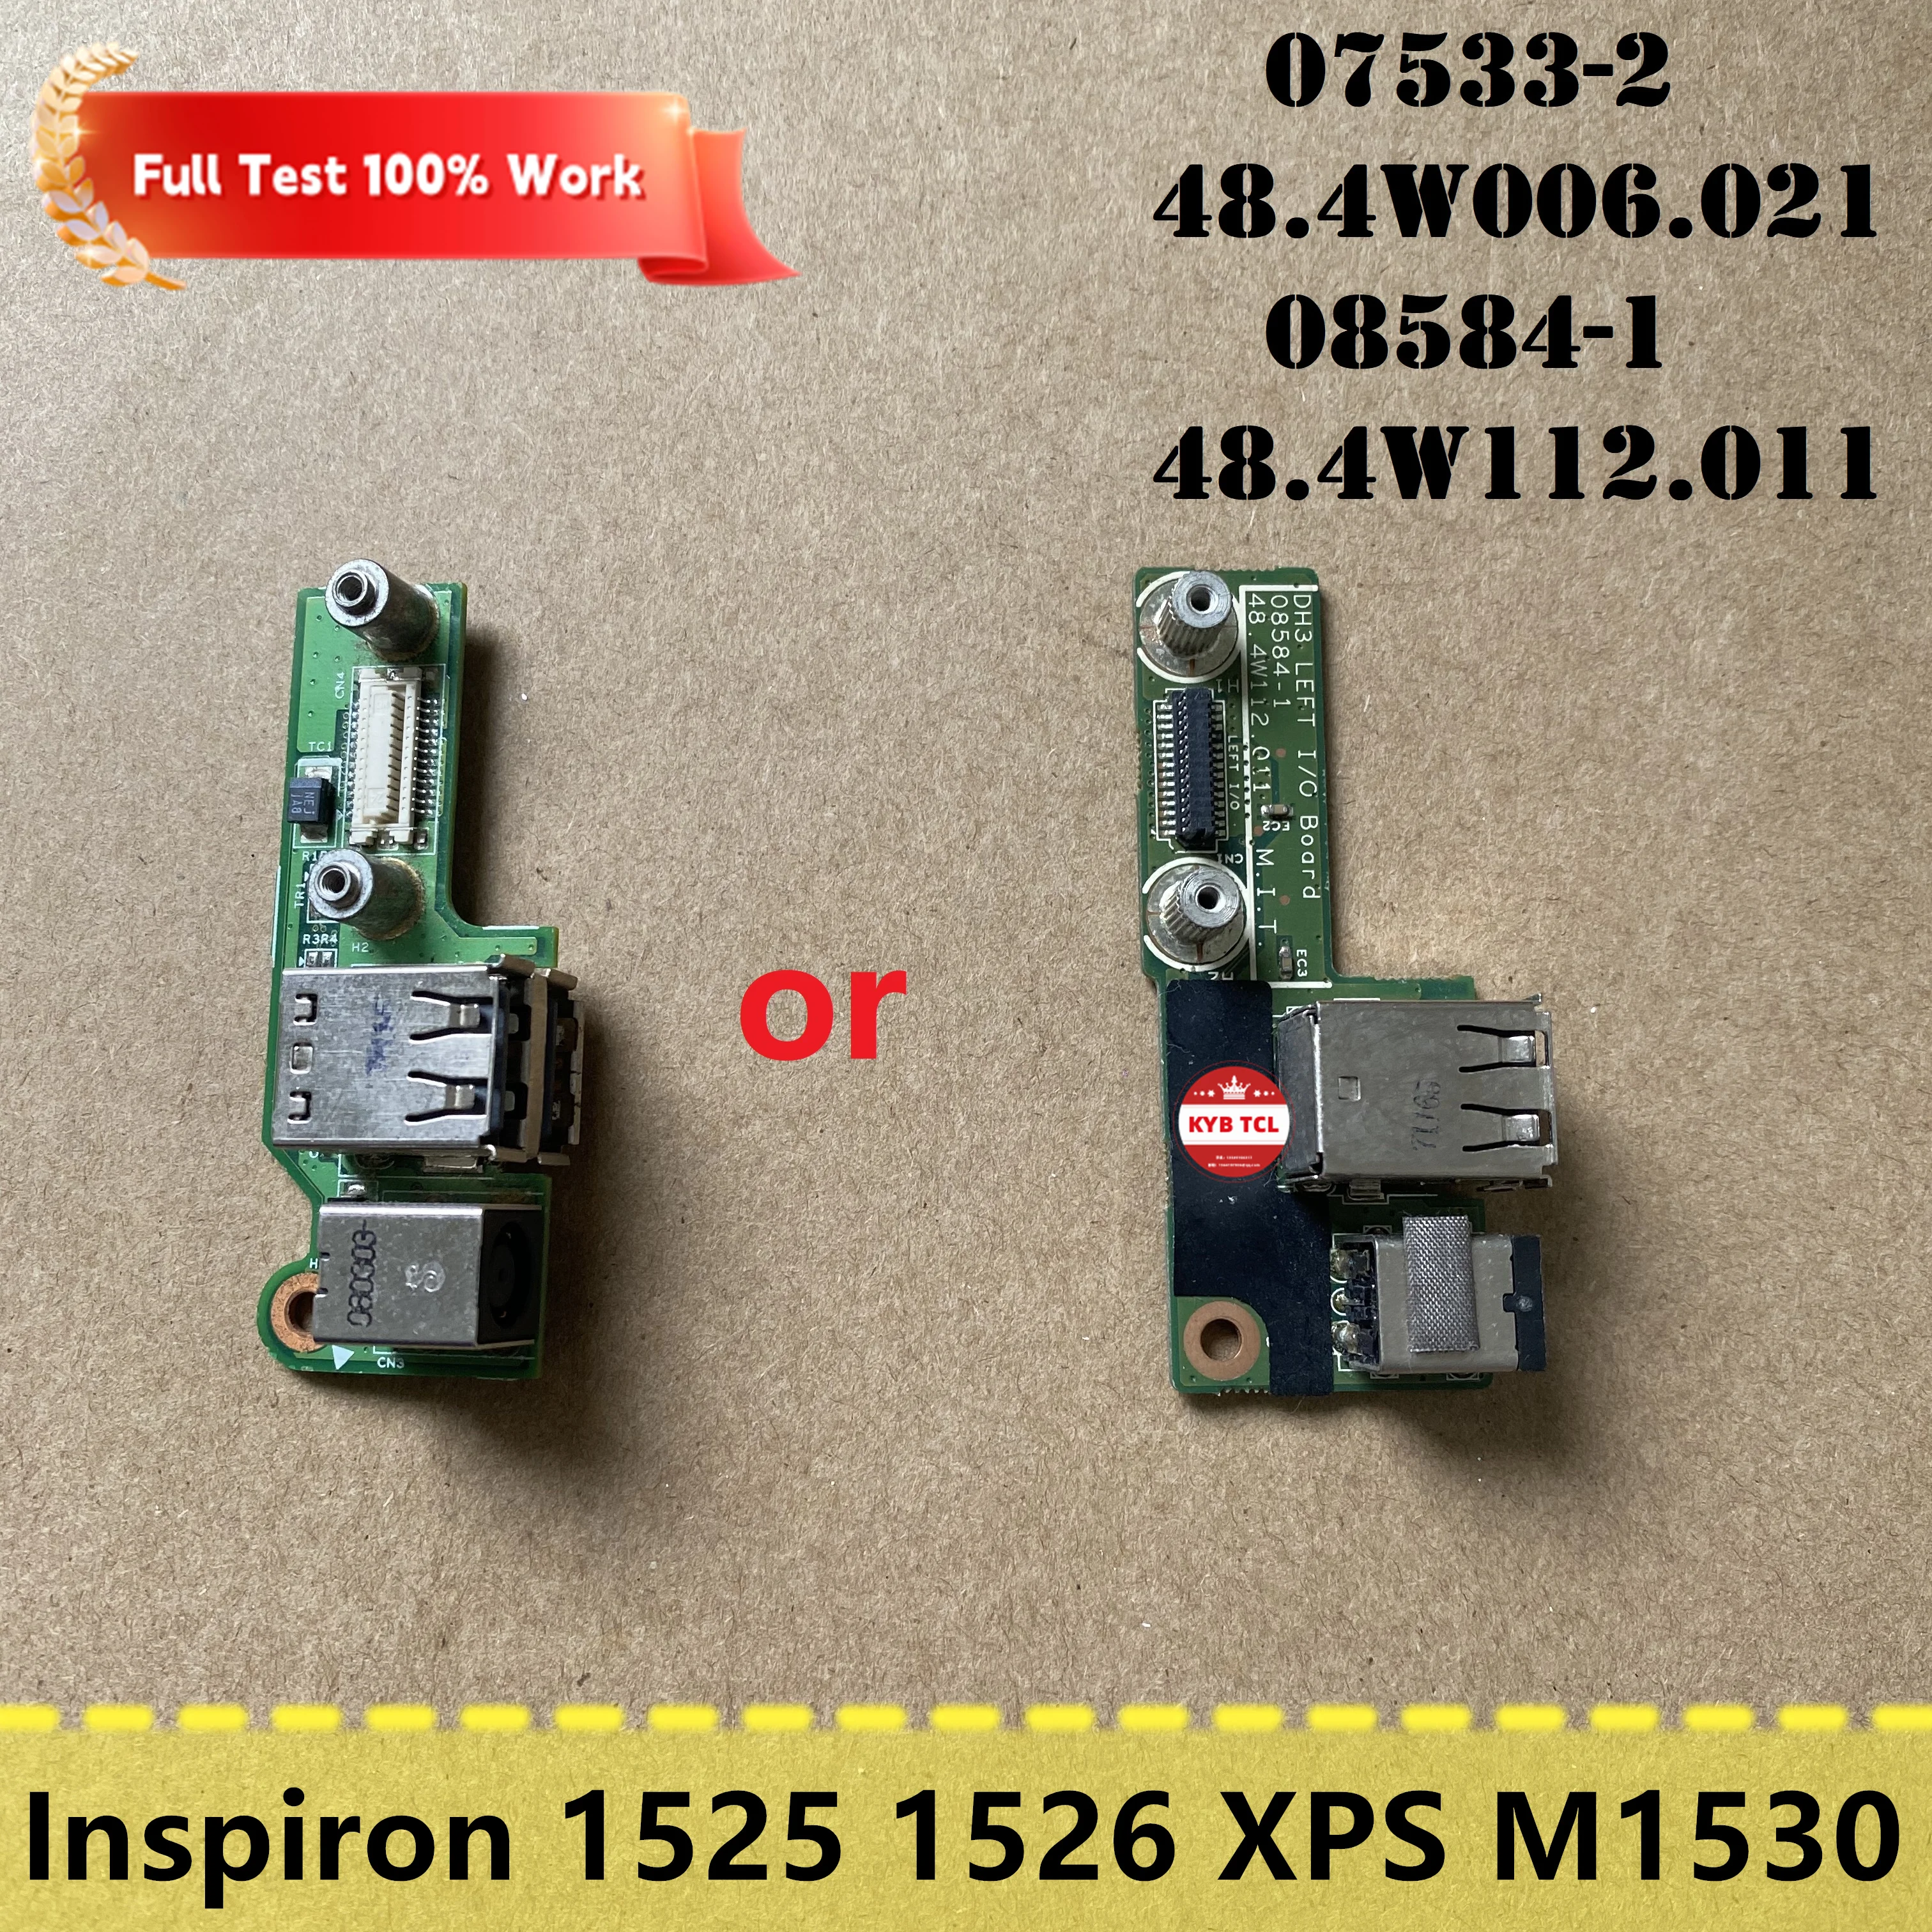 

Для ноутбука Dell Inspiron 1525 1526 XPS M1530, разъем постоянного тока и двойная USB-плата 07533-2 48.4w006.021 08584-1 48. 4w112. 011, ноутбук